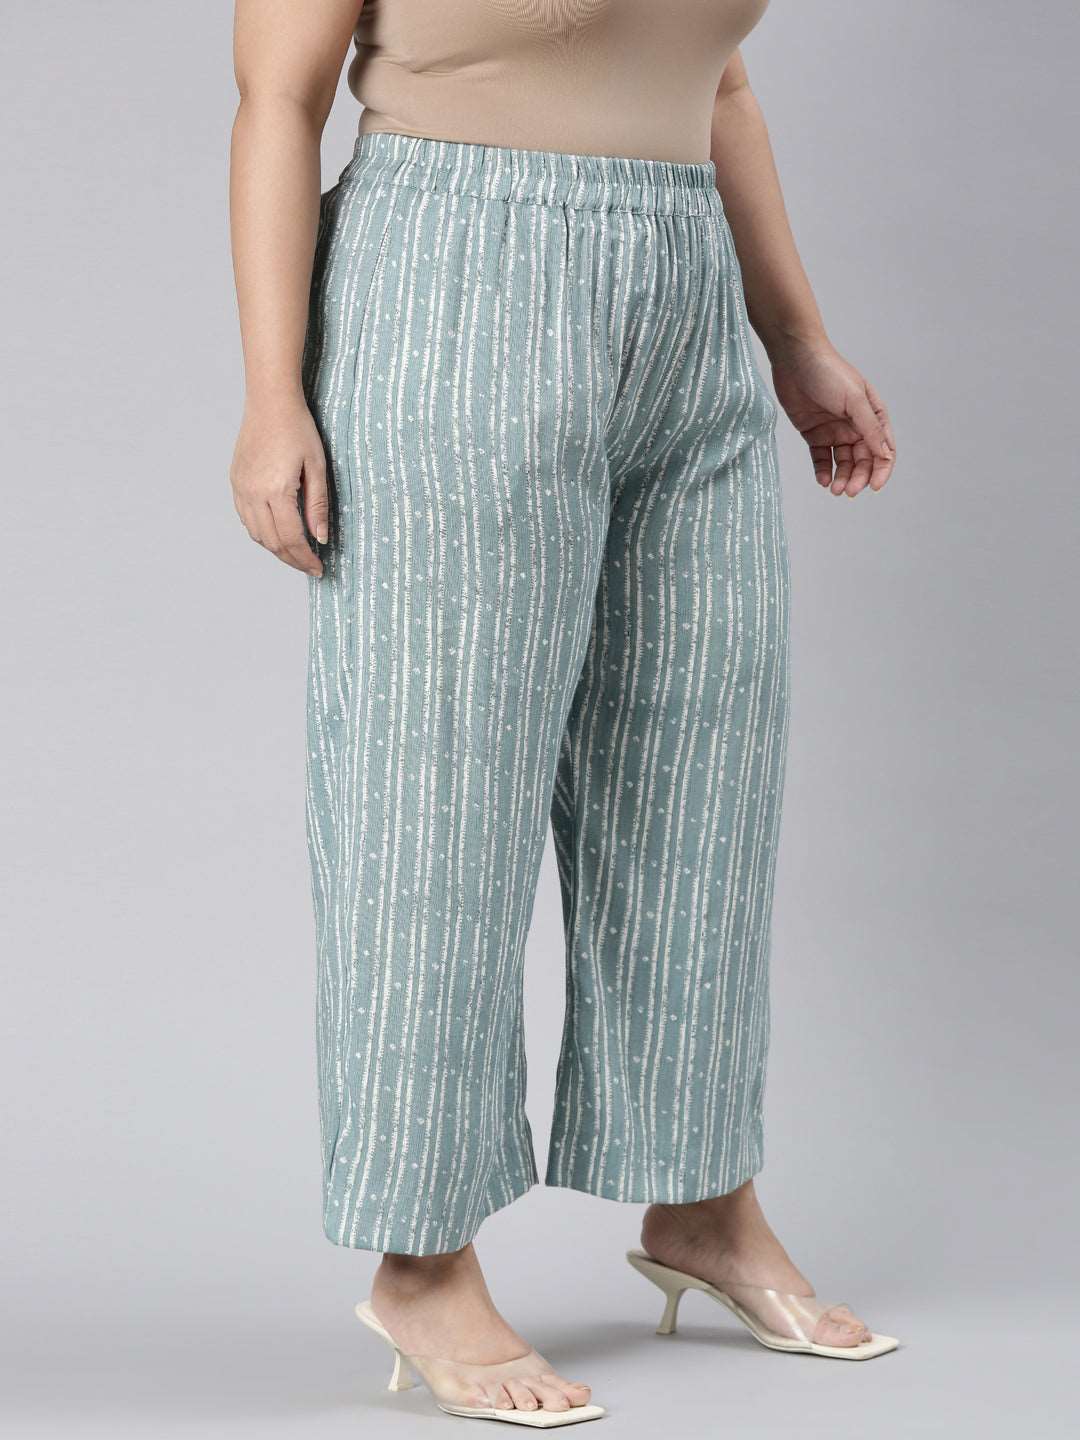 TheShaili - Women's Regular fit palazzo pant with elasticated waistband